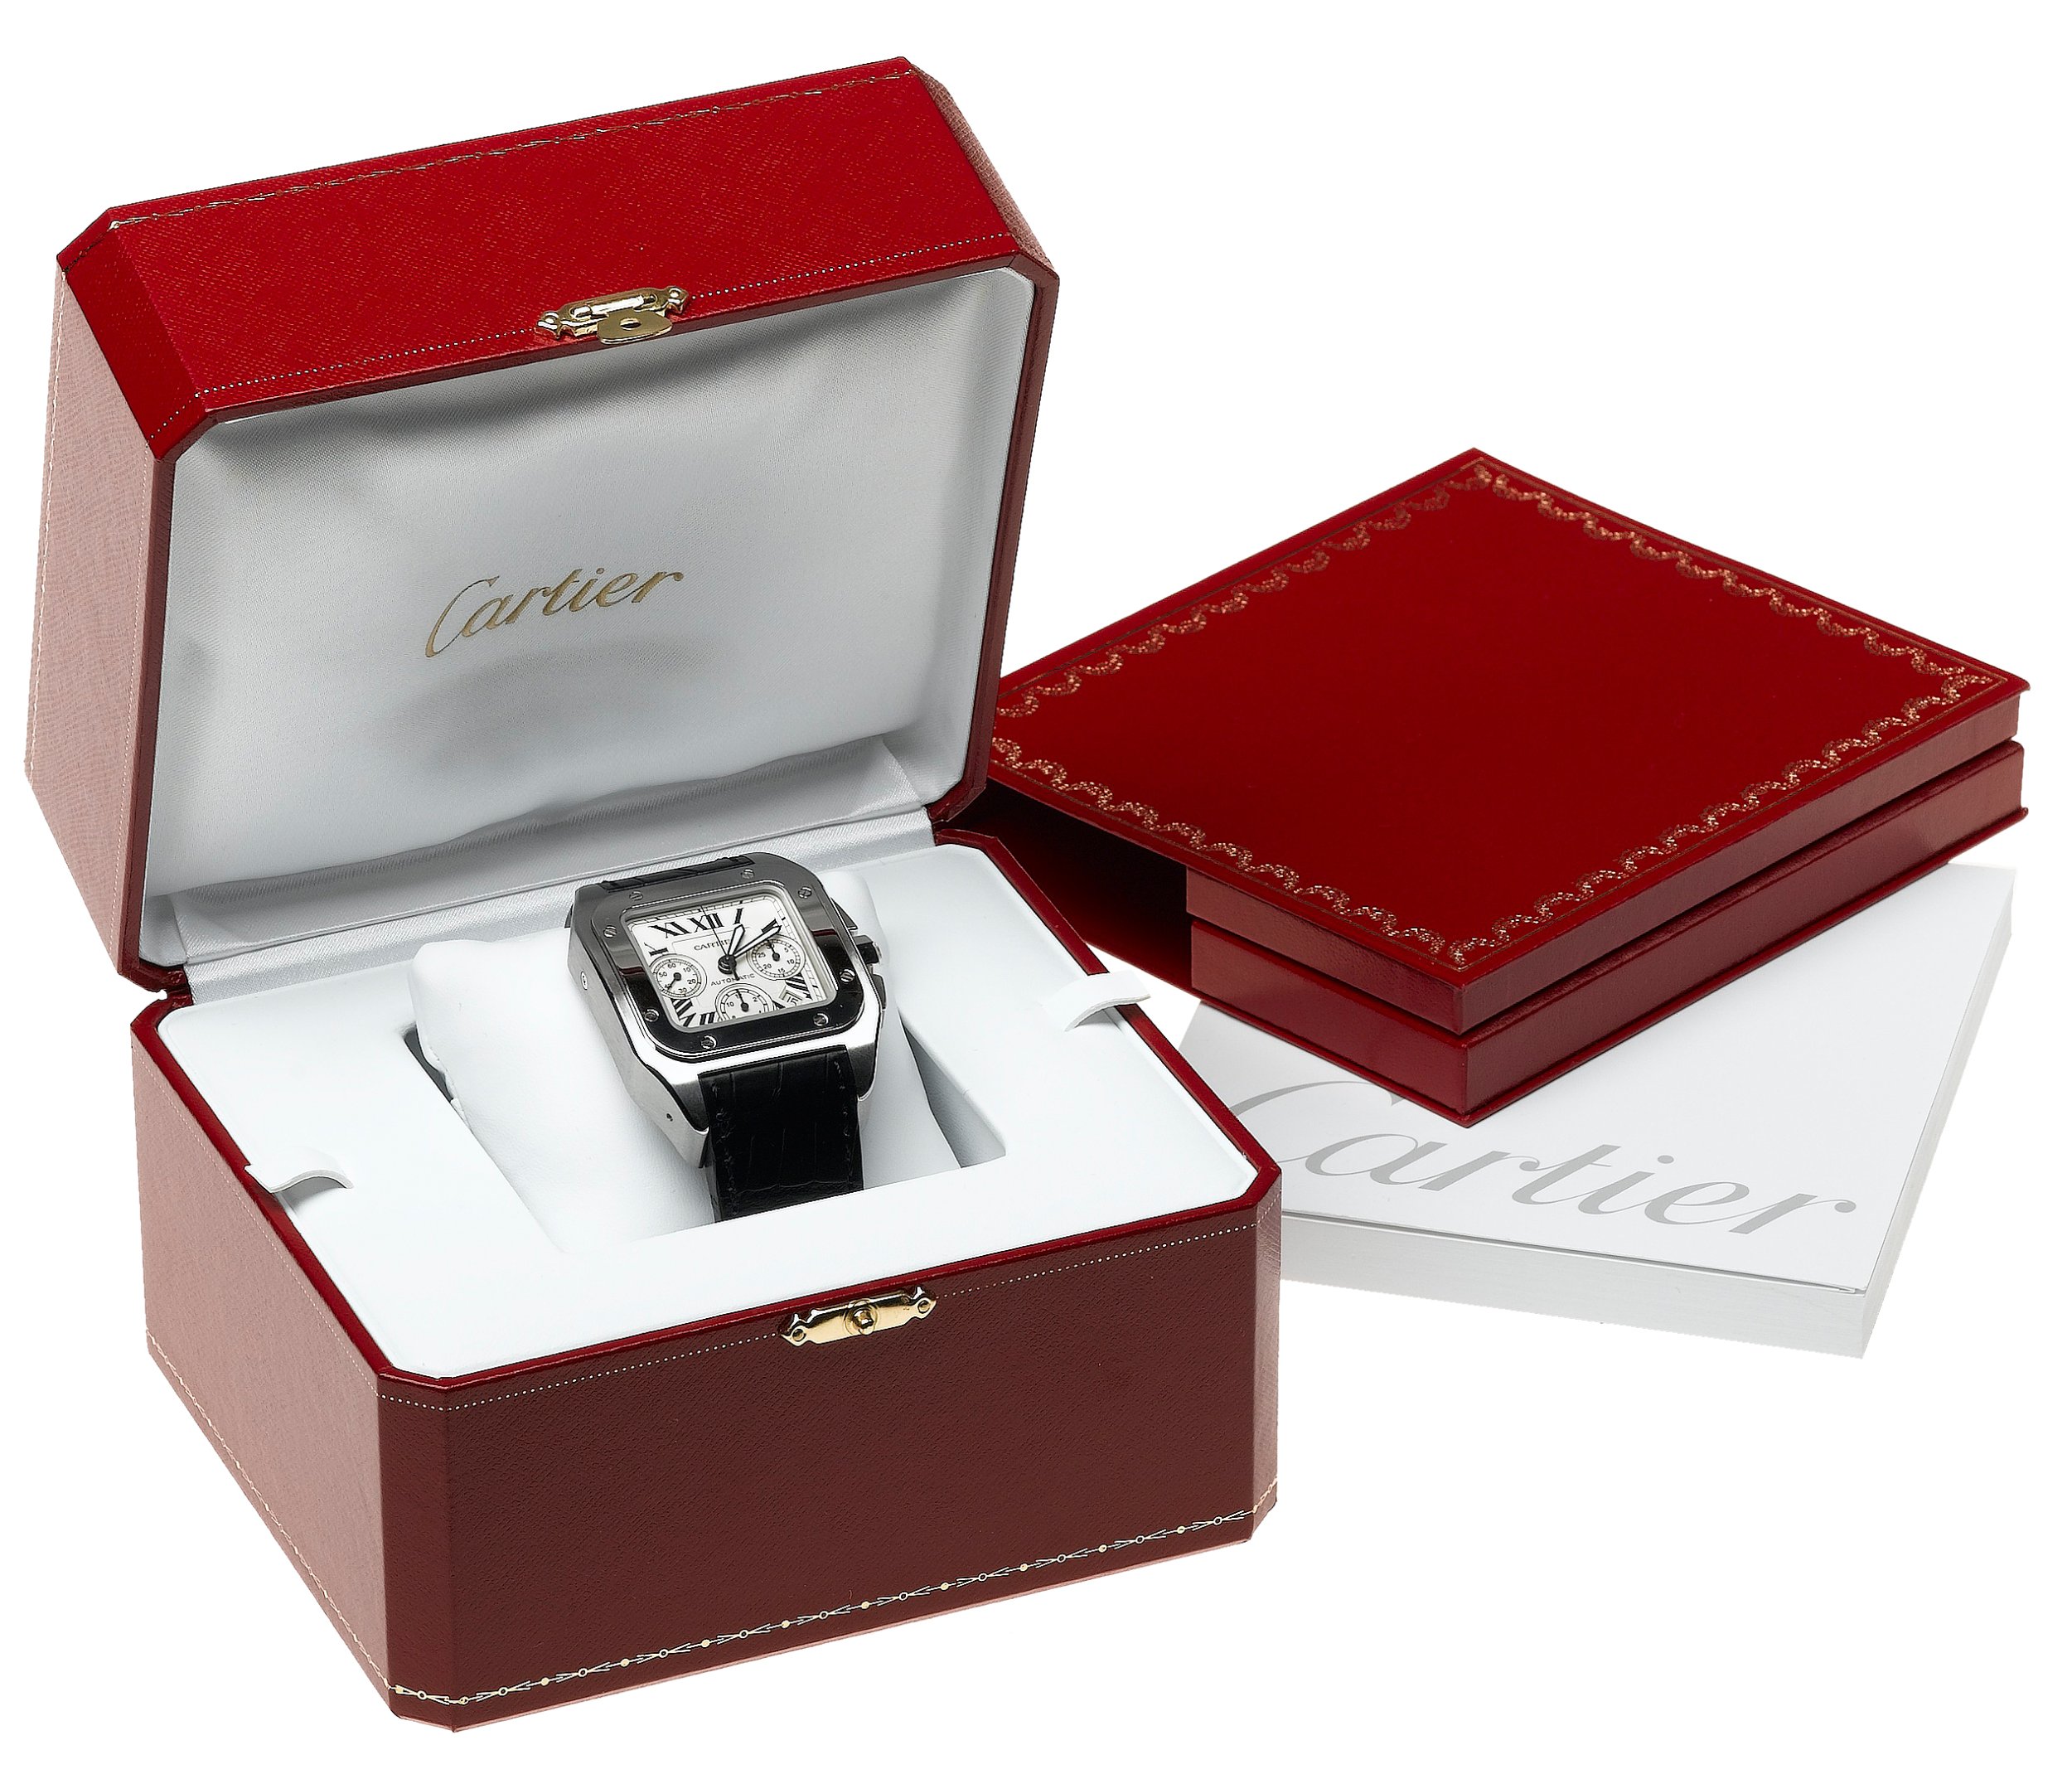 Cartier Men's W20090X8 Santos 100 XL Automatic Chronograph Watch